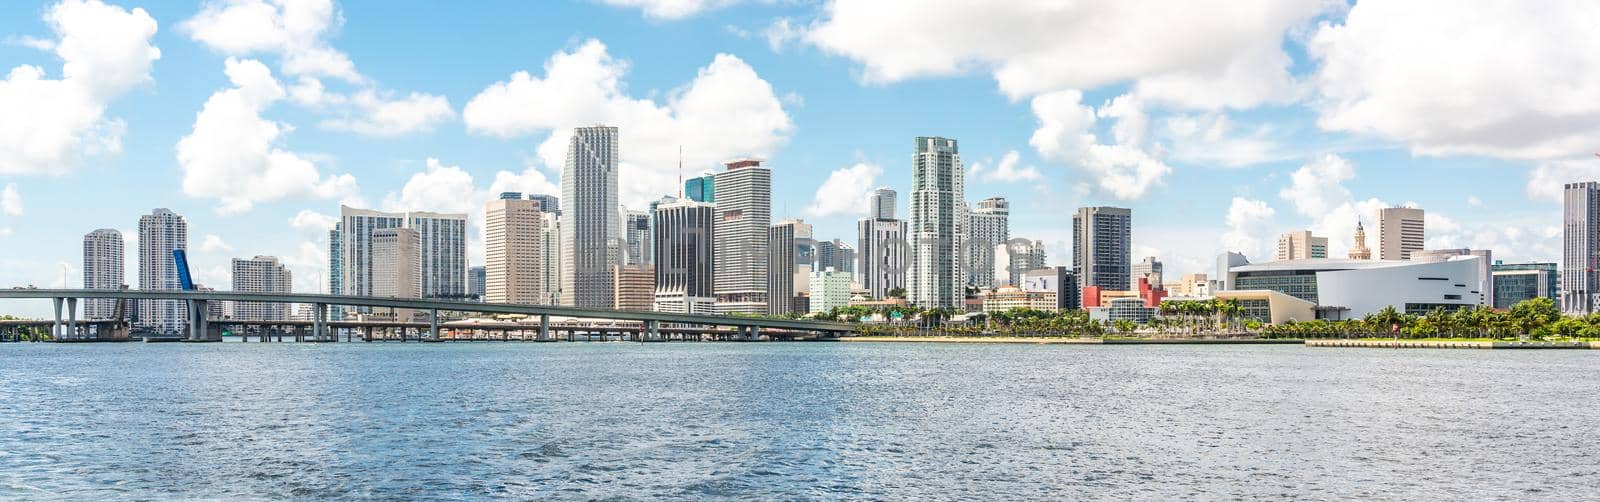 Miami, USA - September 11, 2019: Miami skyline with skyscrapers and bridge over sea by Mariakray